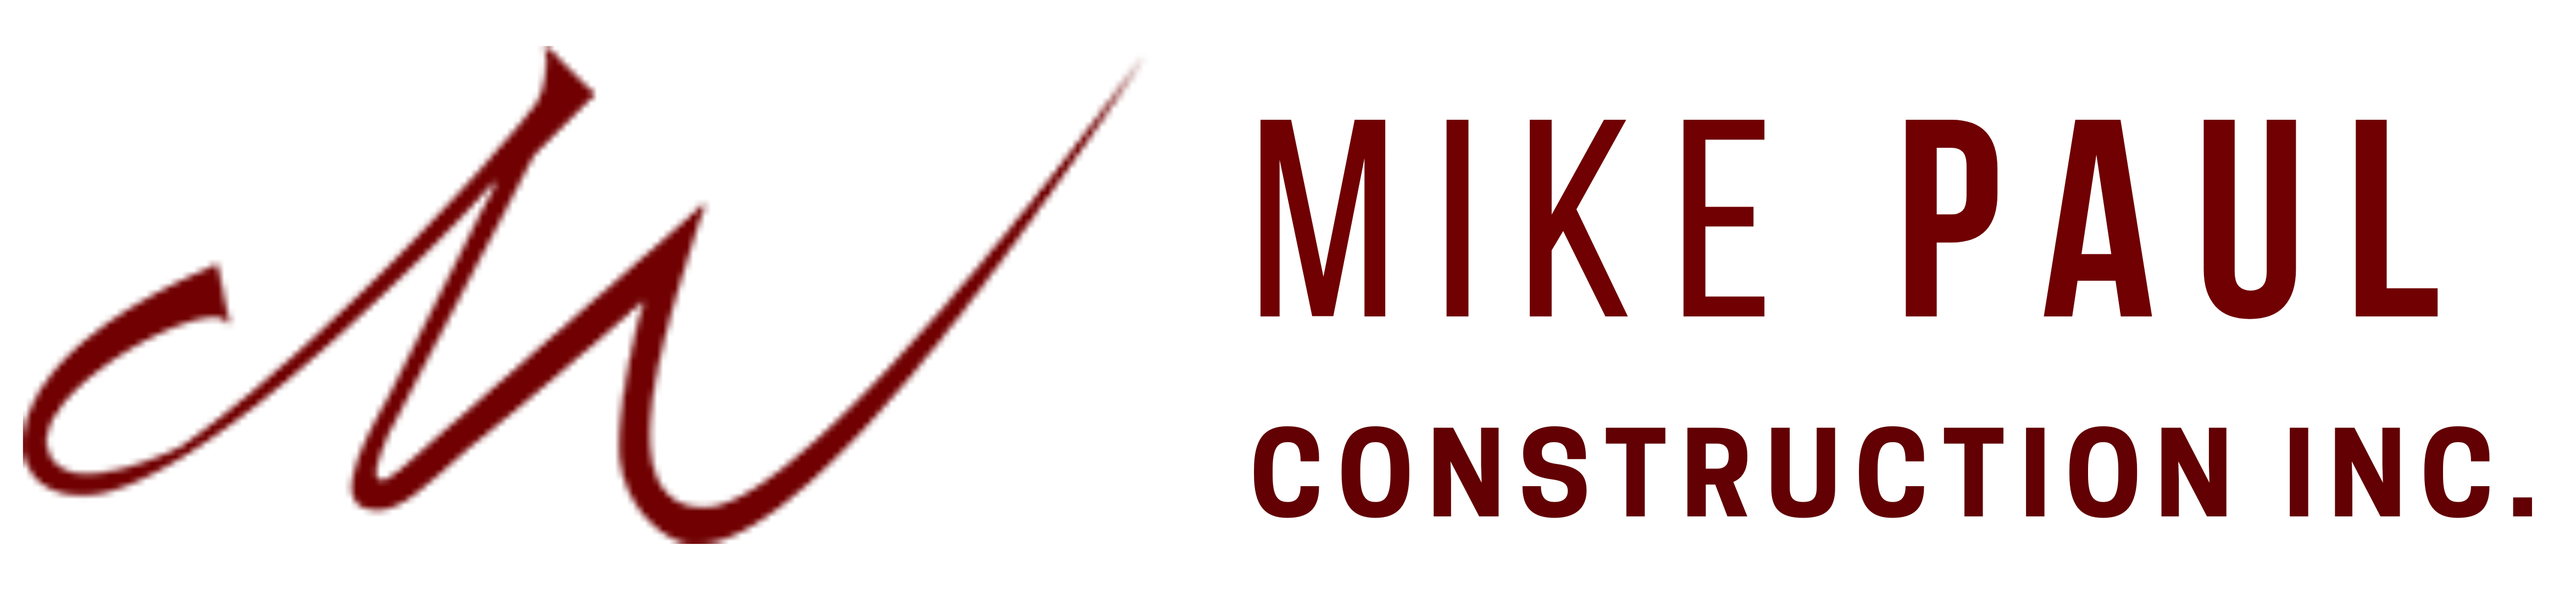 Mike Paul Construction Inc.